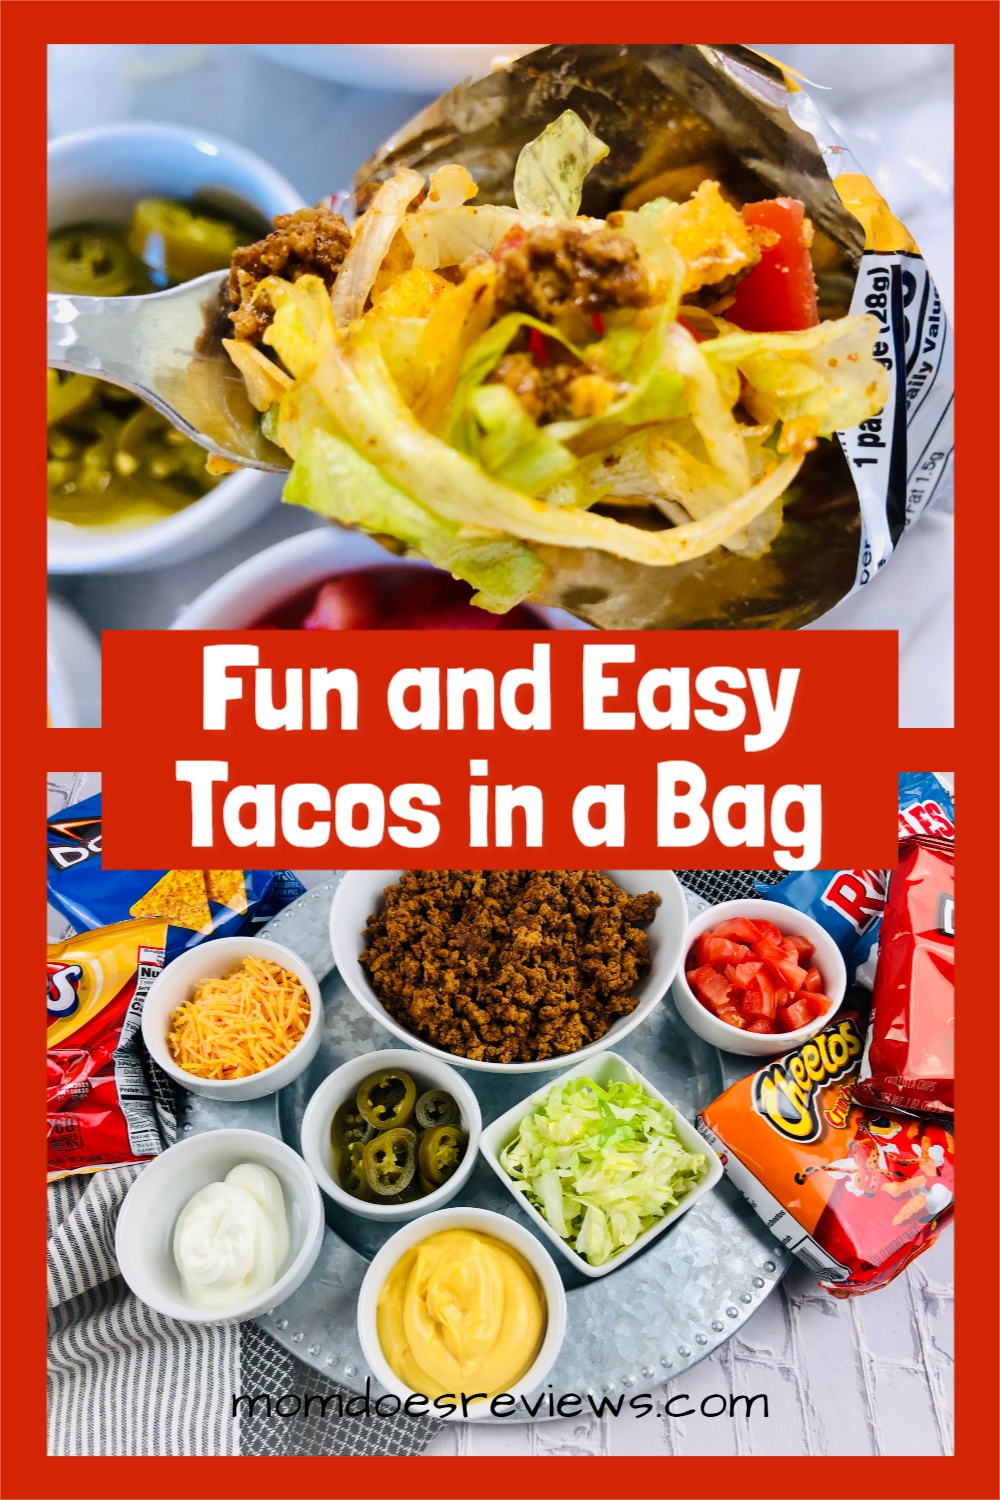 Fun & Easy Tacos in a Bag!